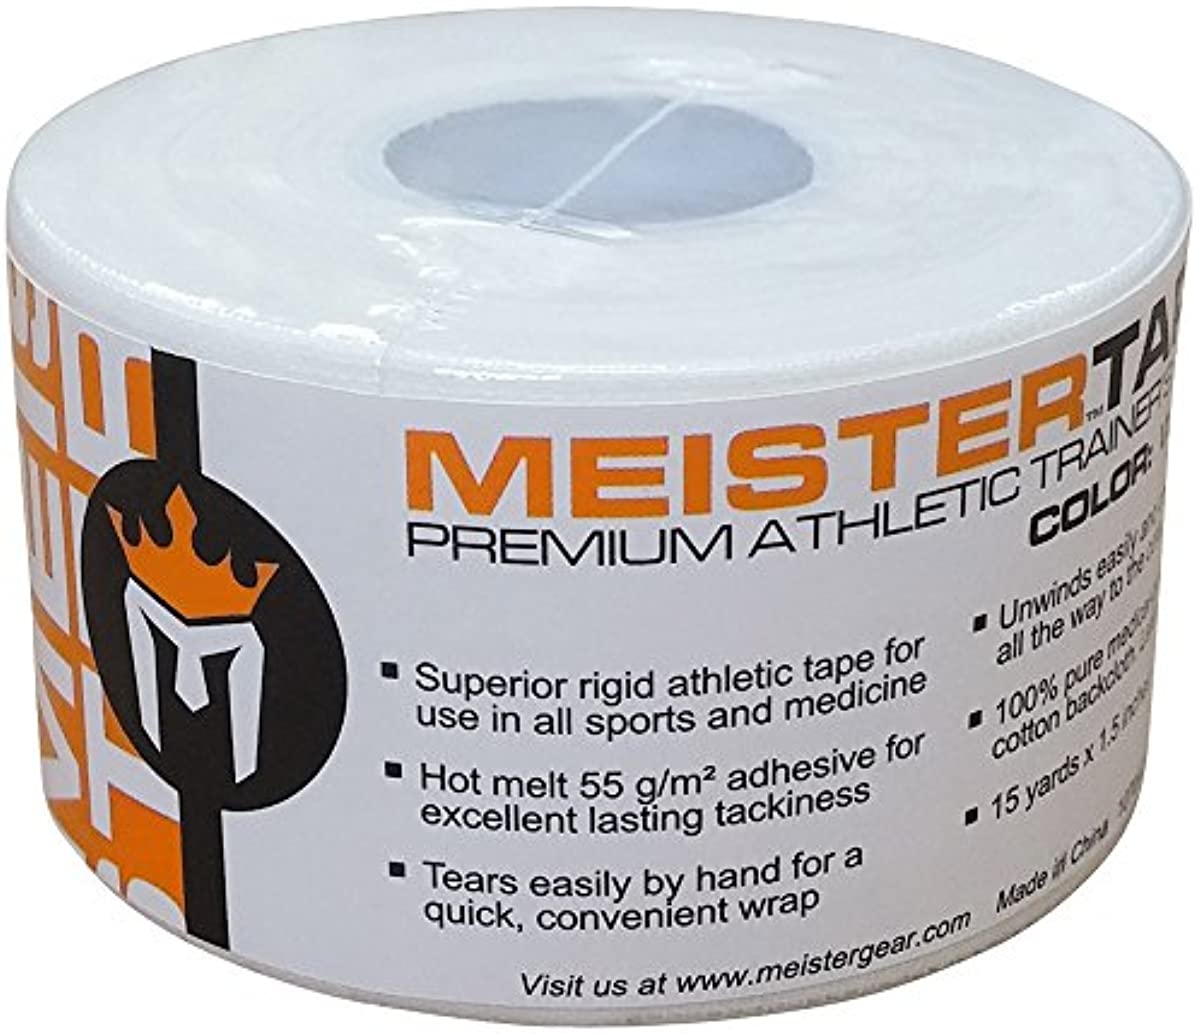 Meister 15Yd x 1.5\" Premium Athletic Trainer\'s Tape for Sports and Medical (50{551fb3cac2628c3ddf6f2a69d1035d1a657858dcf67a3a7b0275e2bb3915e3e4} Longer) - White - 6 Rolls